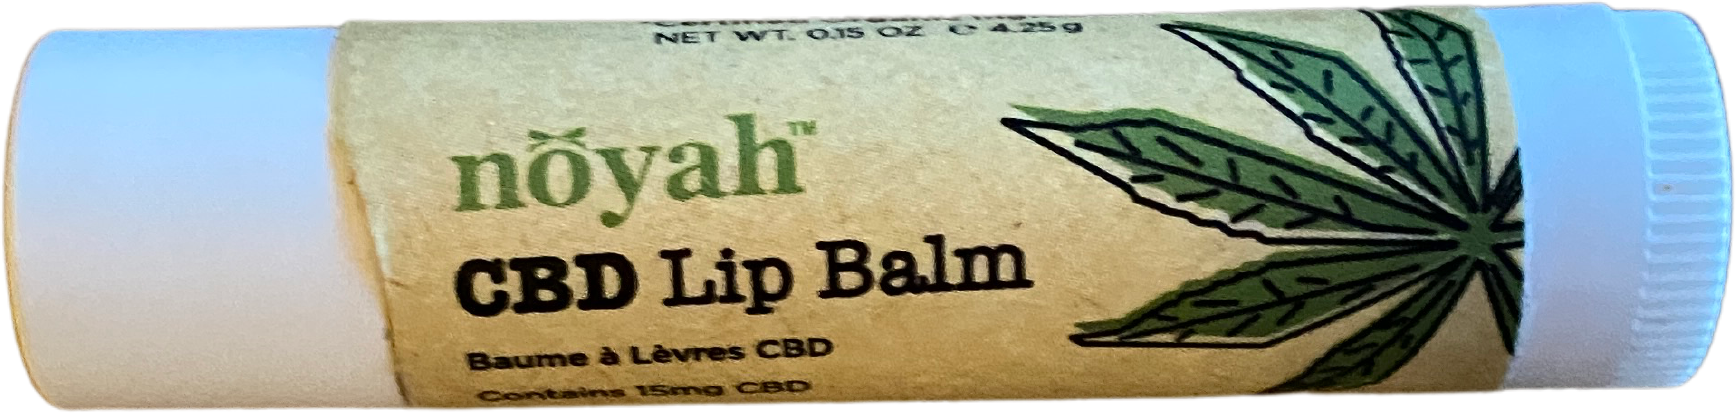 Noyah CBD lip balm